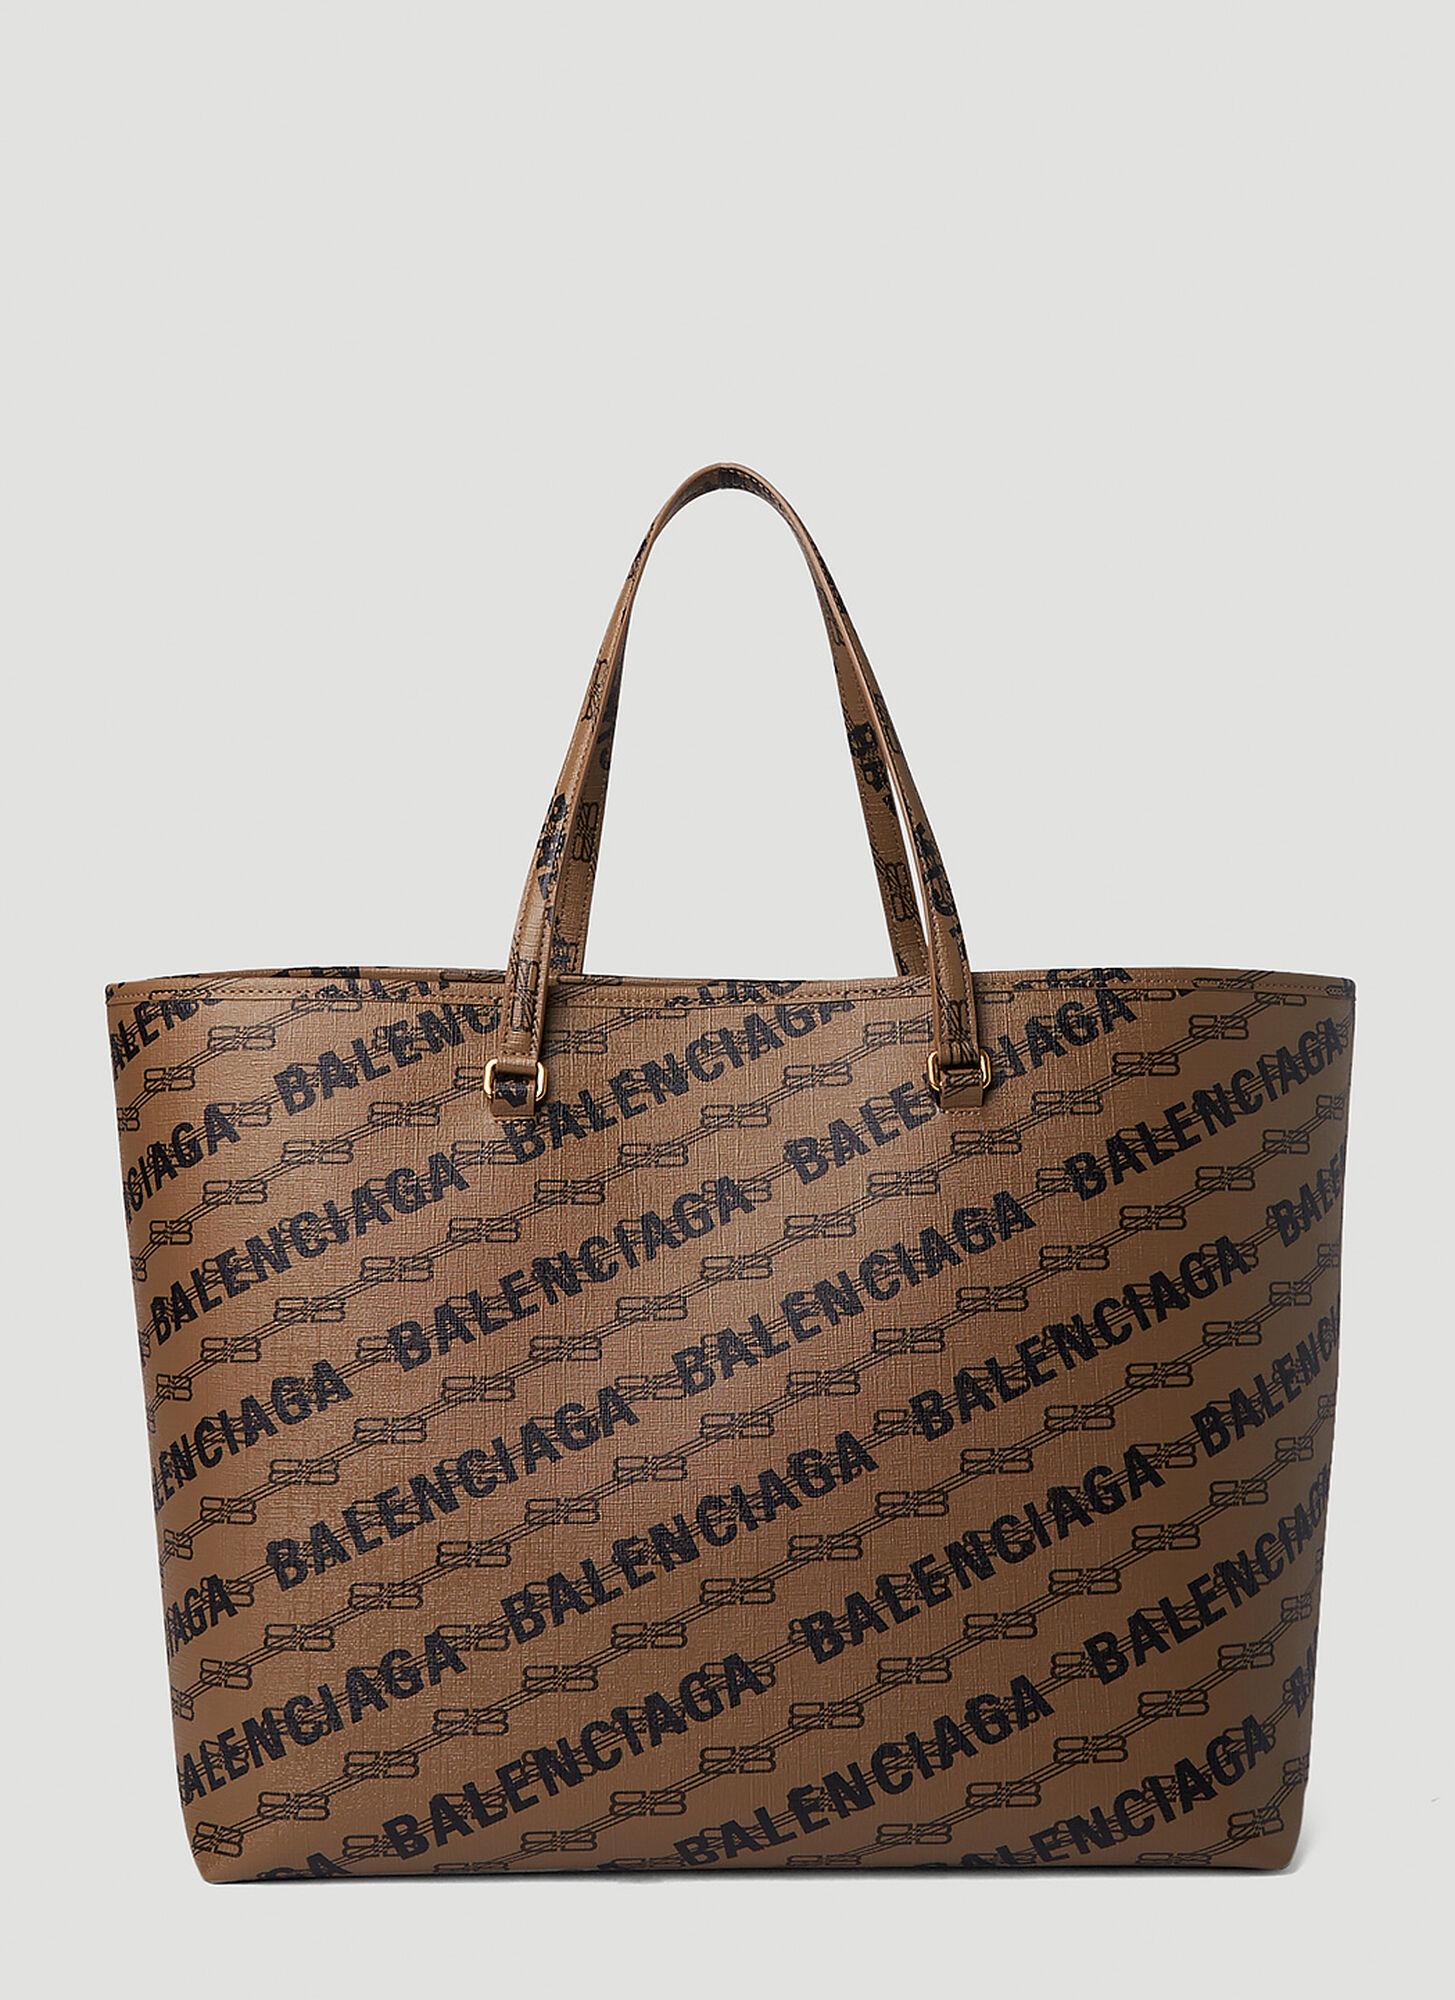 Balenciaga Women's Jumbo Large Tote Bag